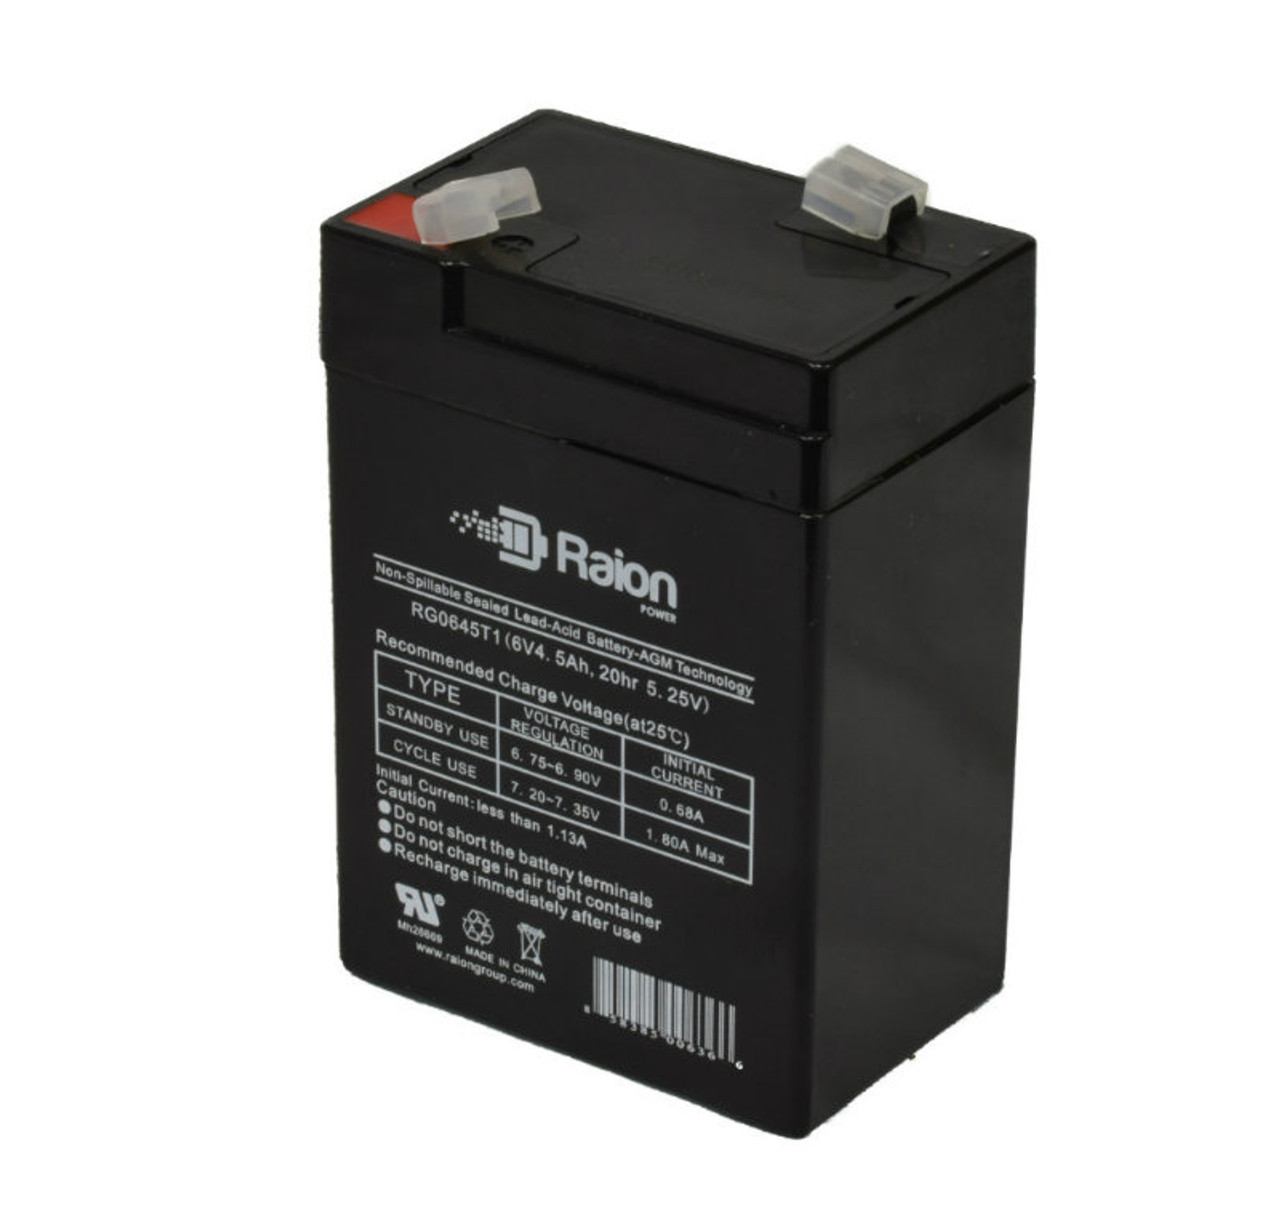 Raion Power RG0645T1 6V 4.5Ah Replacement Battery Cartridge for FullRiver HGL4-6